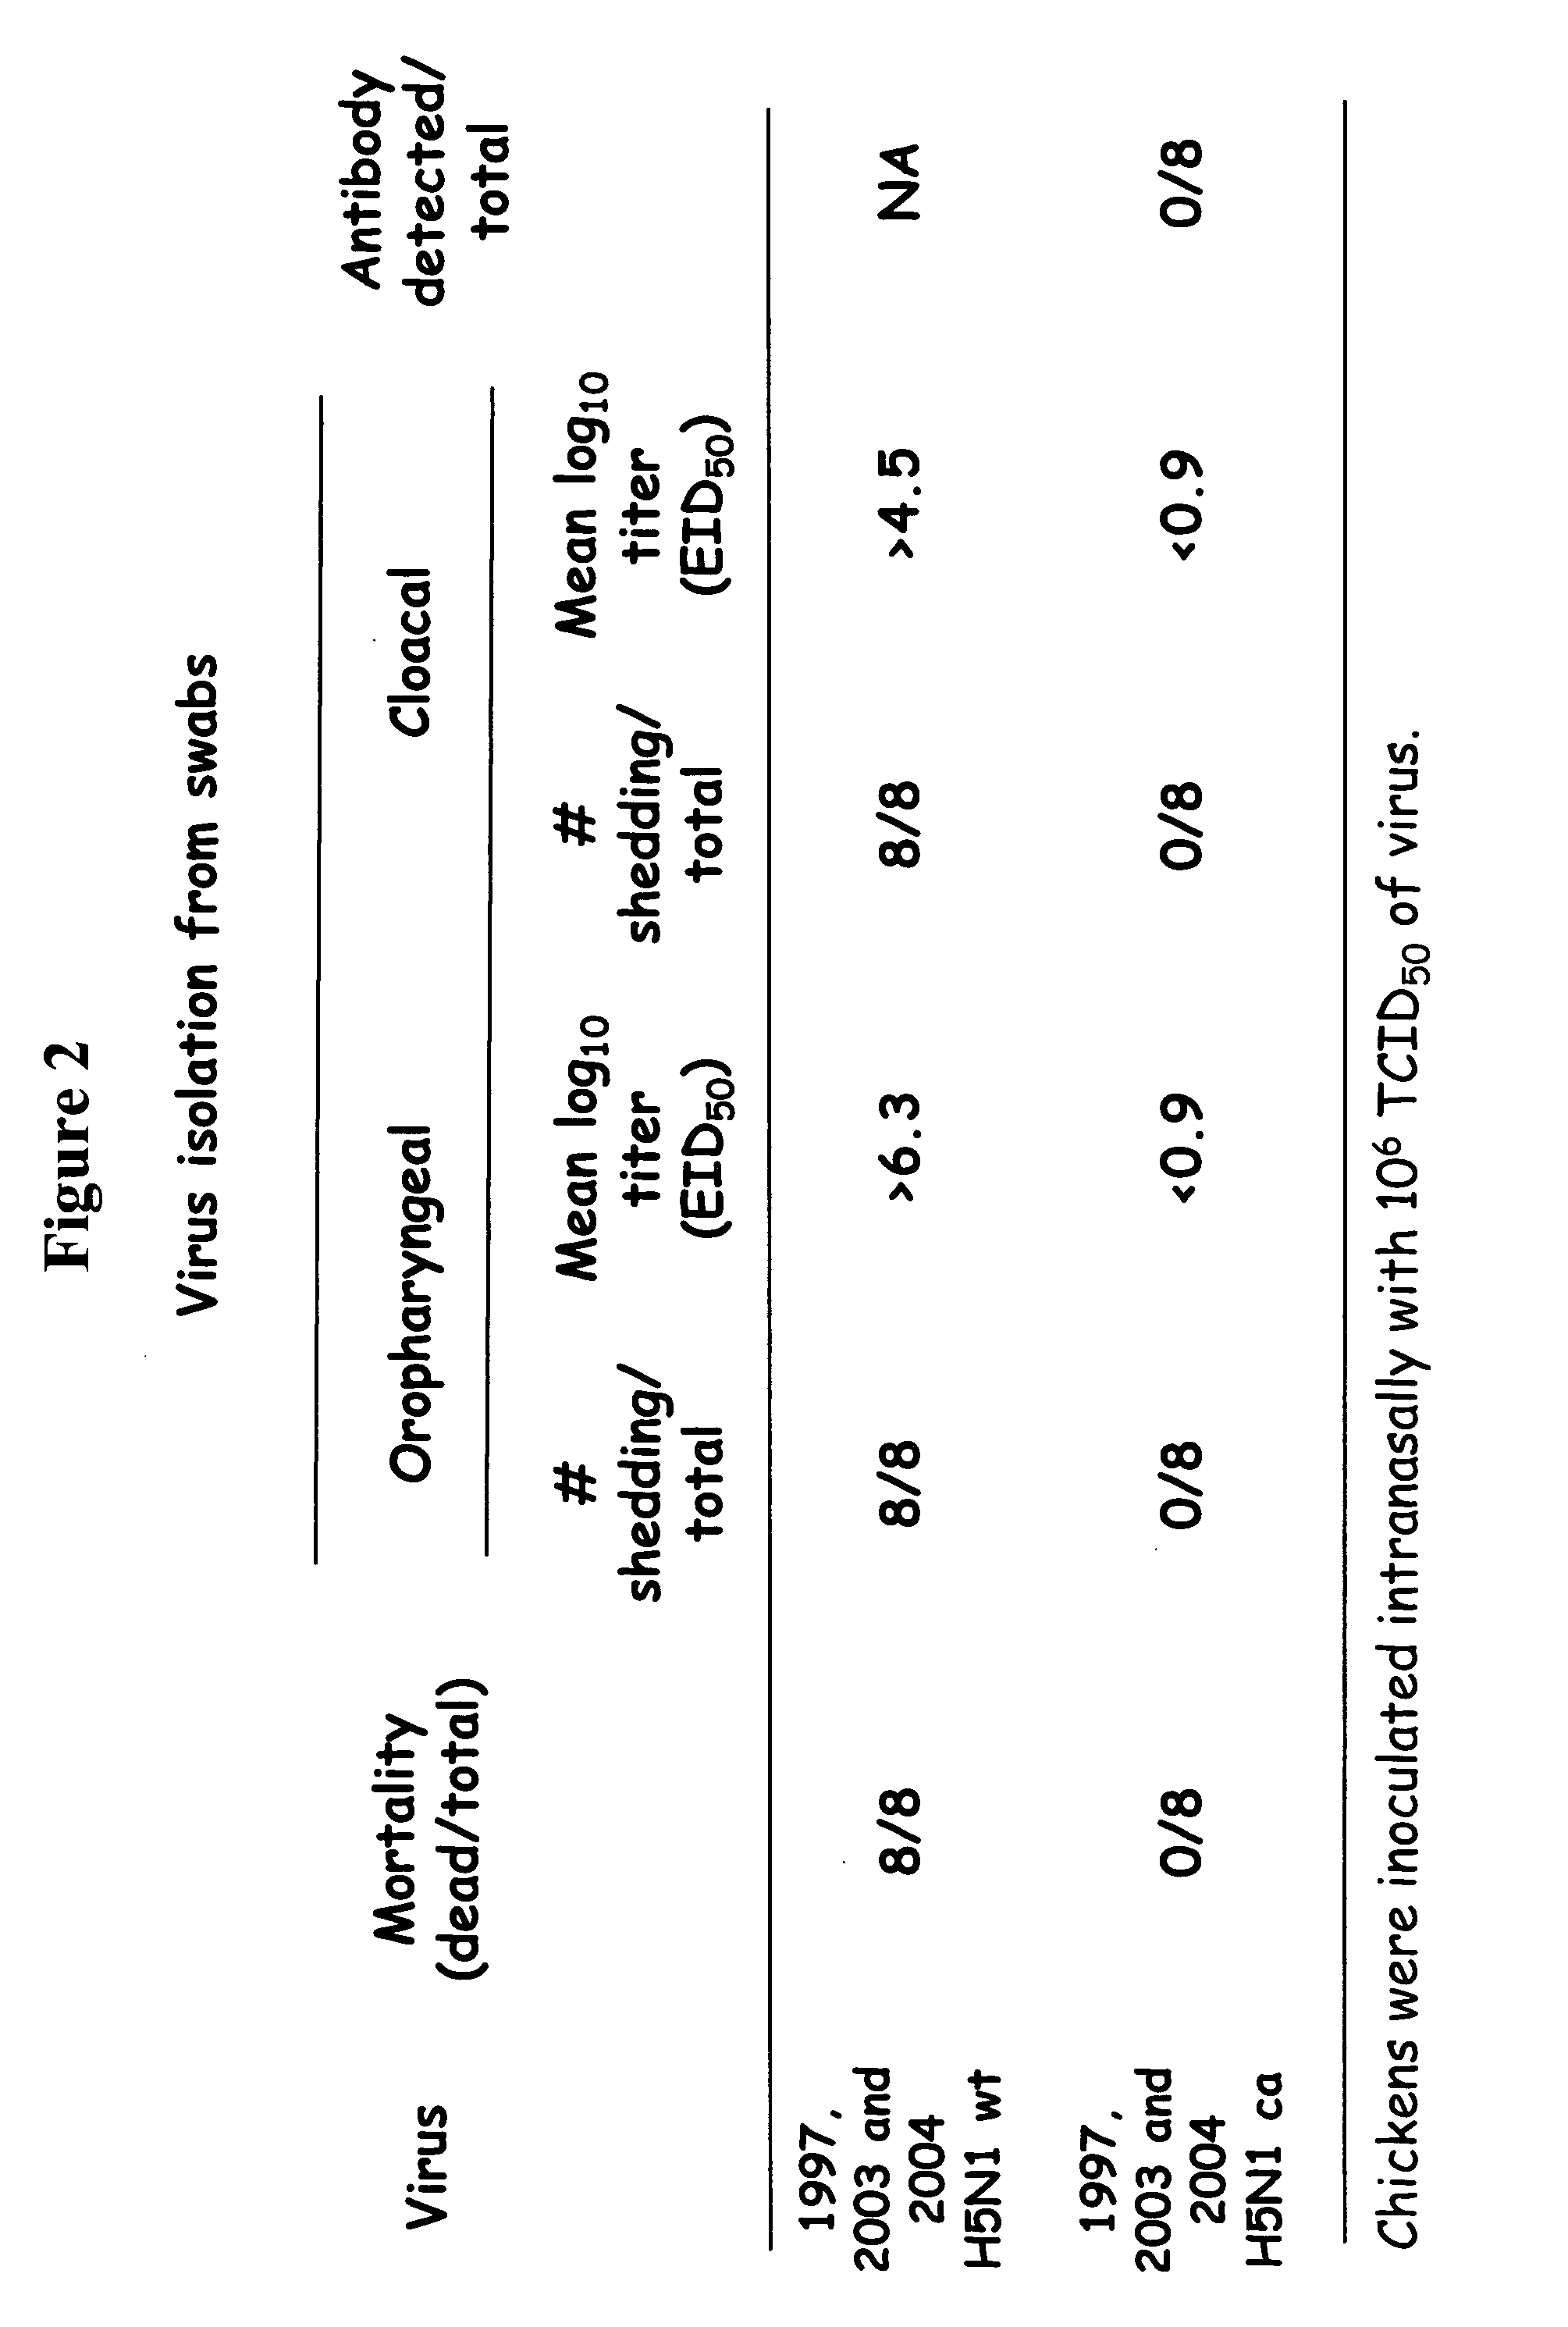 Influenza hemagglutinin and neuraminidase variants